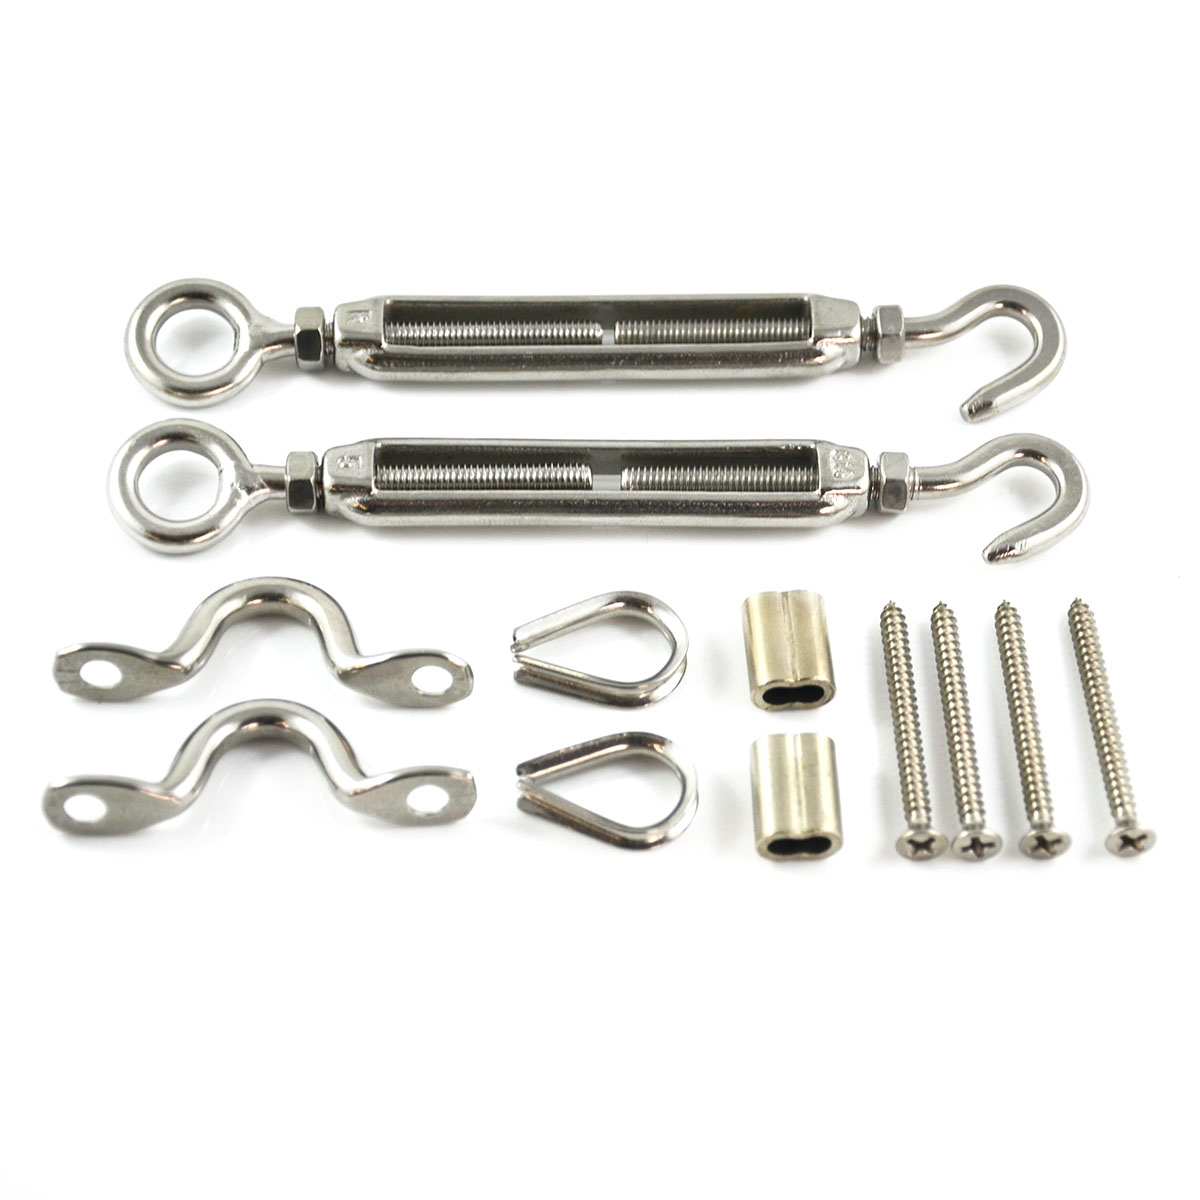 Stainless Steel Wire Rope Balustrade Kit - Eye/Hook Turnbuckle Kit